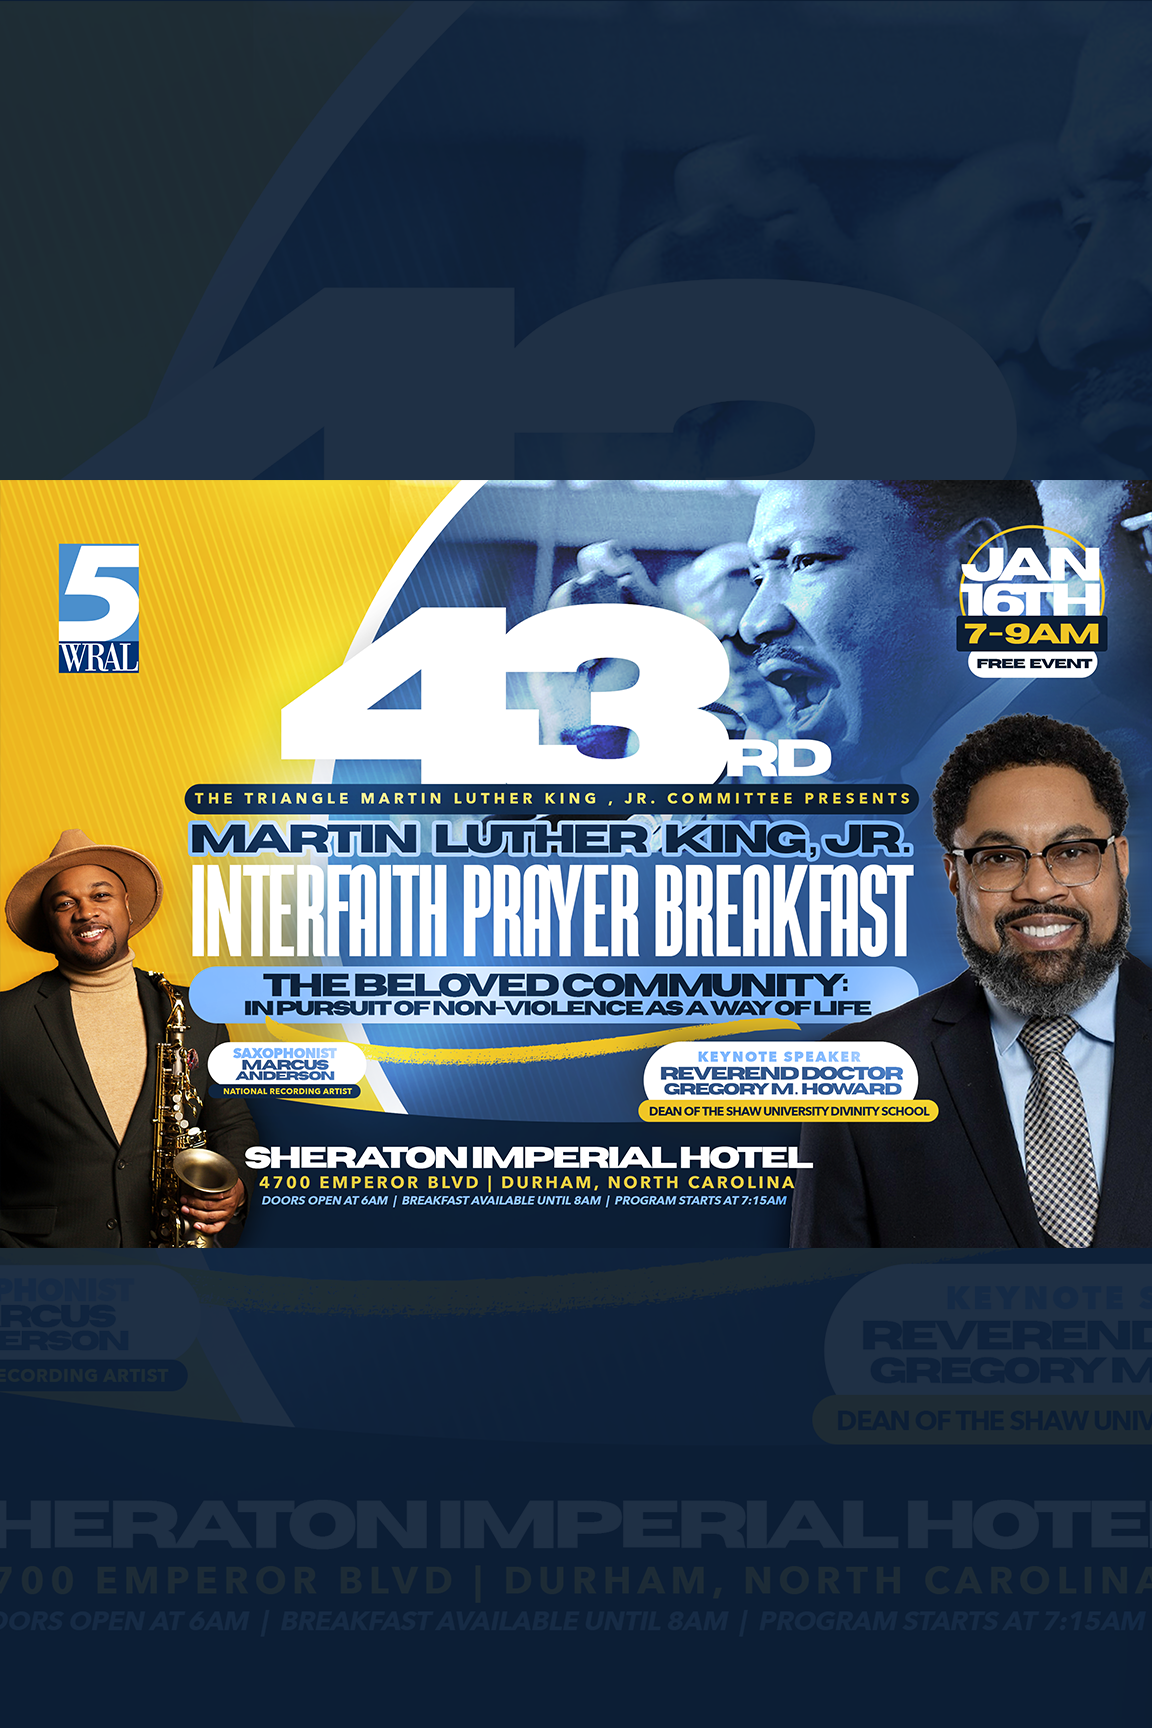 43rd Annual Prayer Breakfast